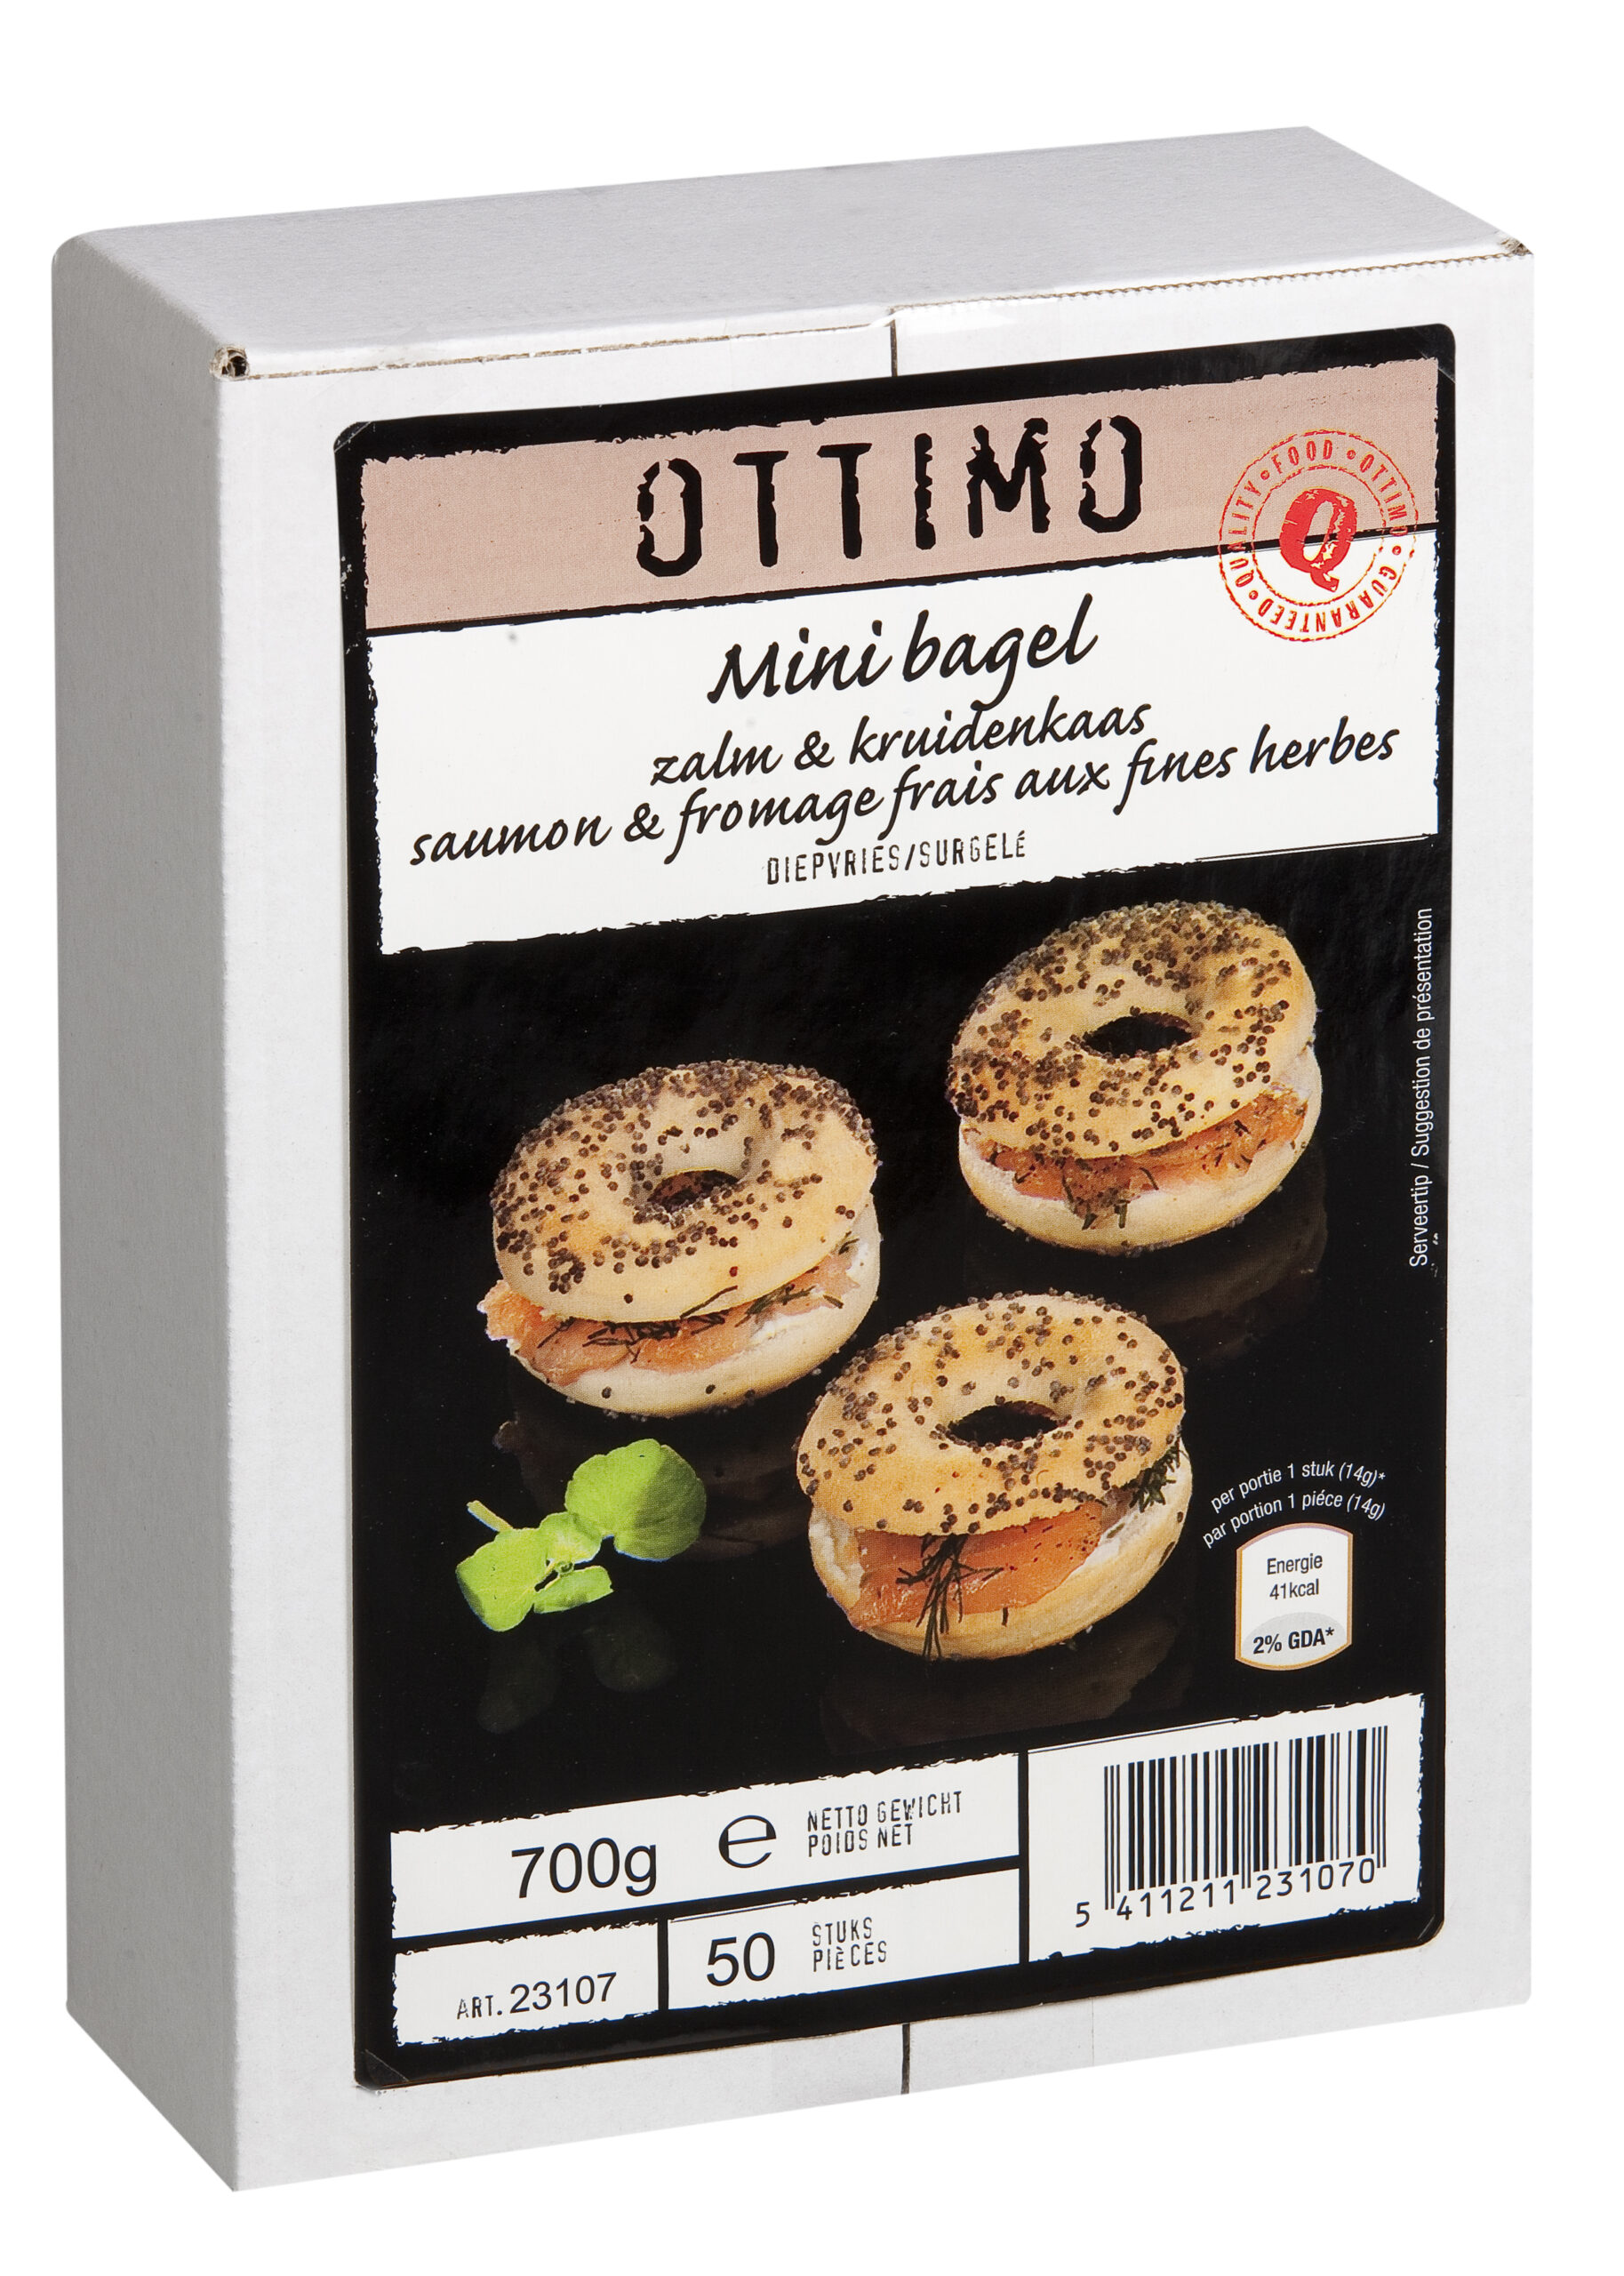 Mini bagel zalm & kruidenkaas 50 x 14g OTTIMO